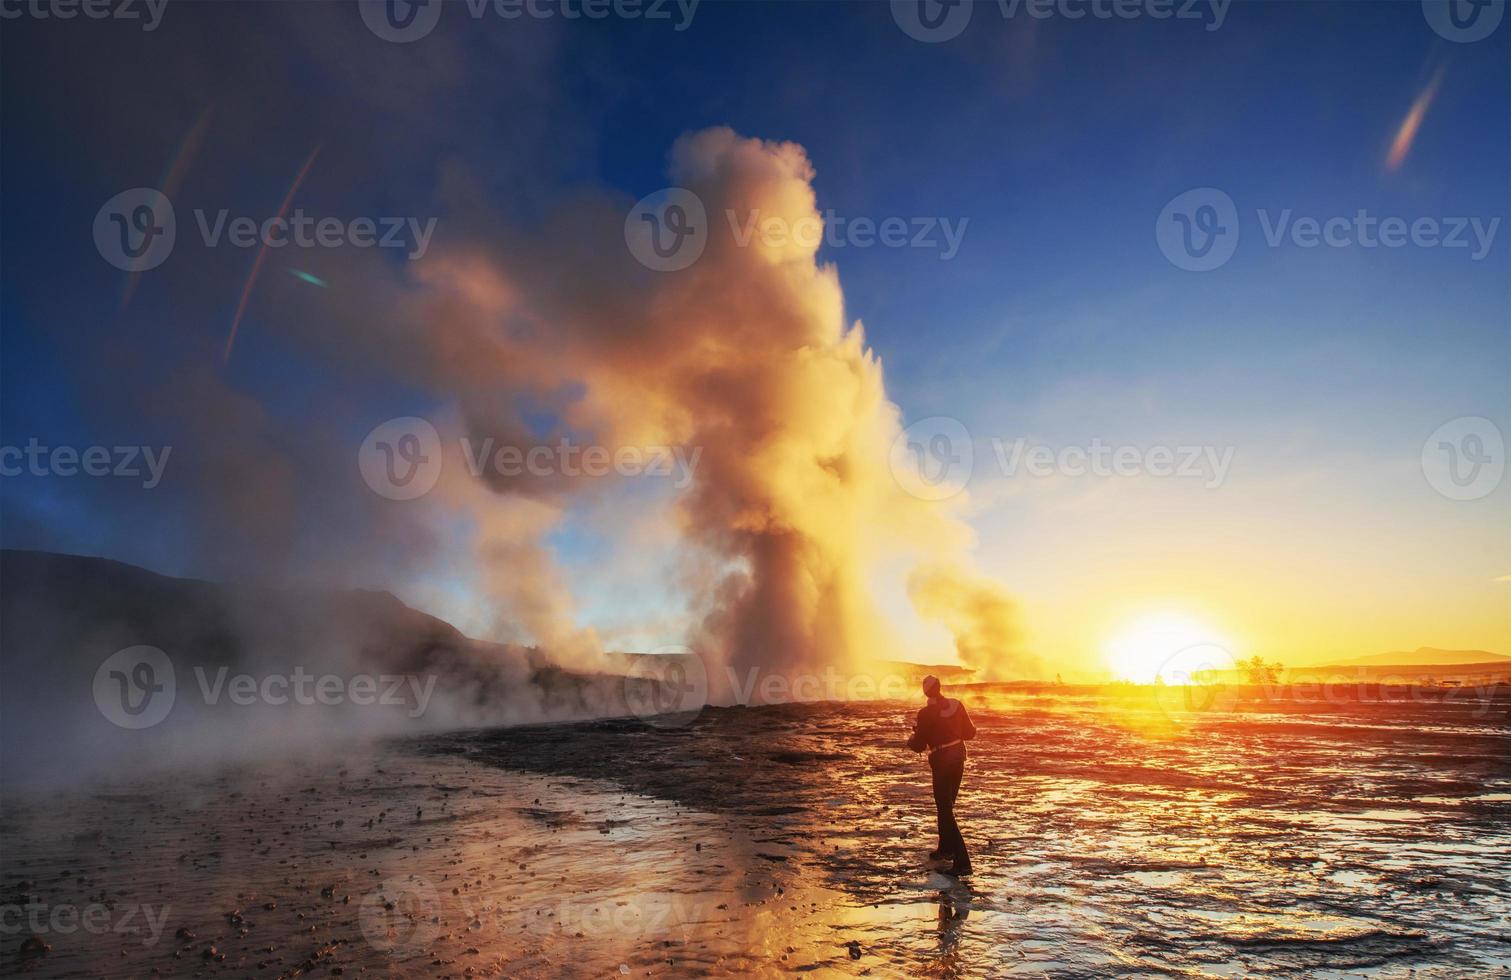 fantastica eruzione del geyser Strokkur al tramonto in Islanda foto